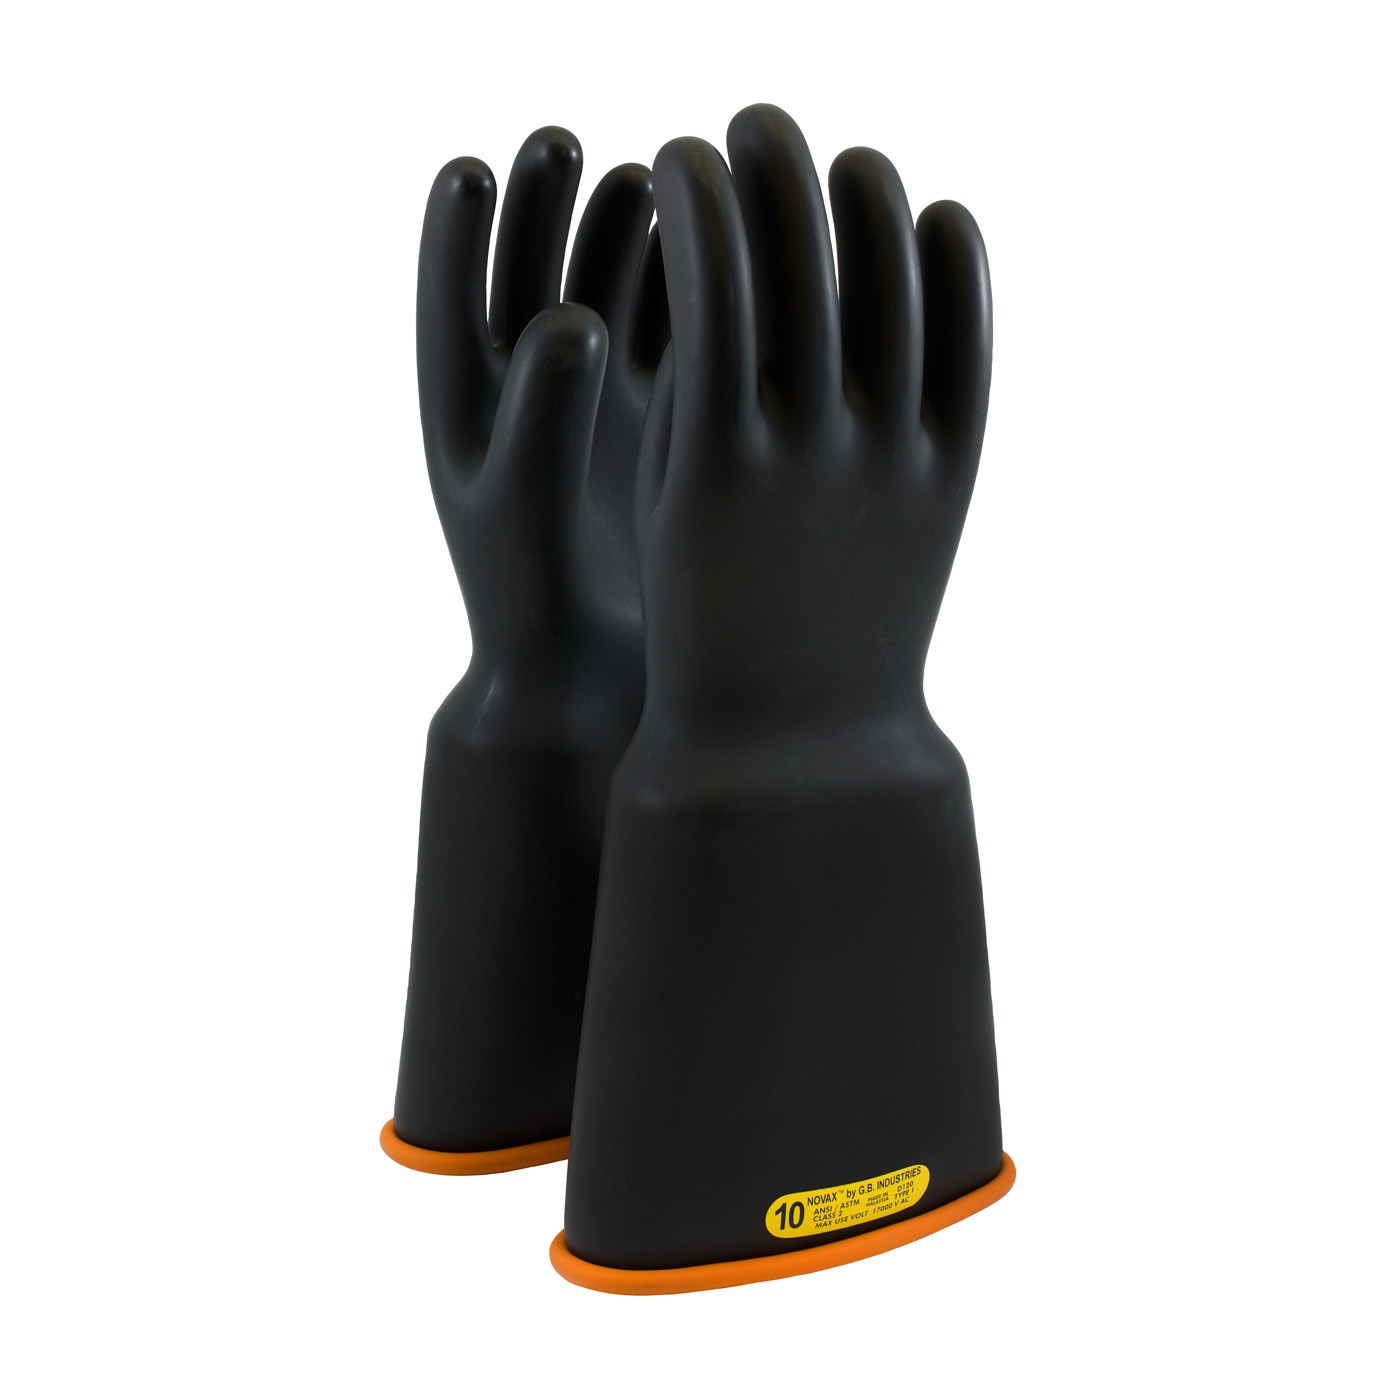  NOVAX® Class 2 Rubber Insulating Glove with Bell Cuff - 16"  (#159-2-16)